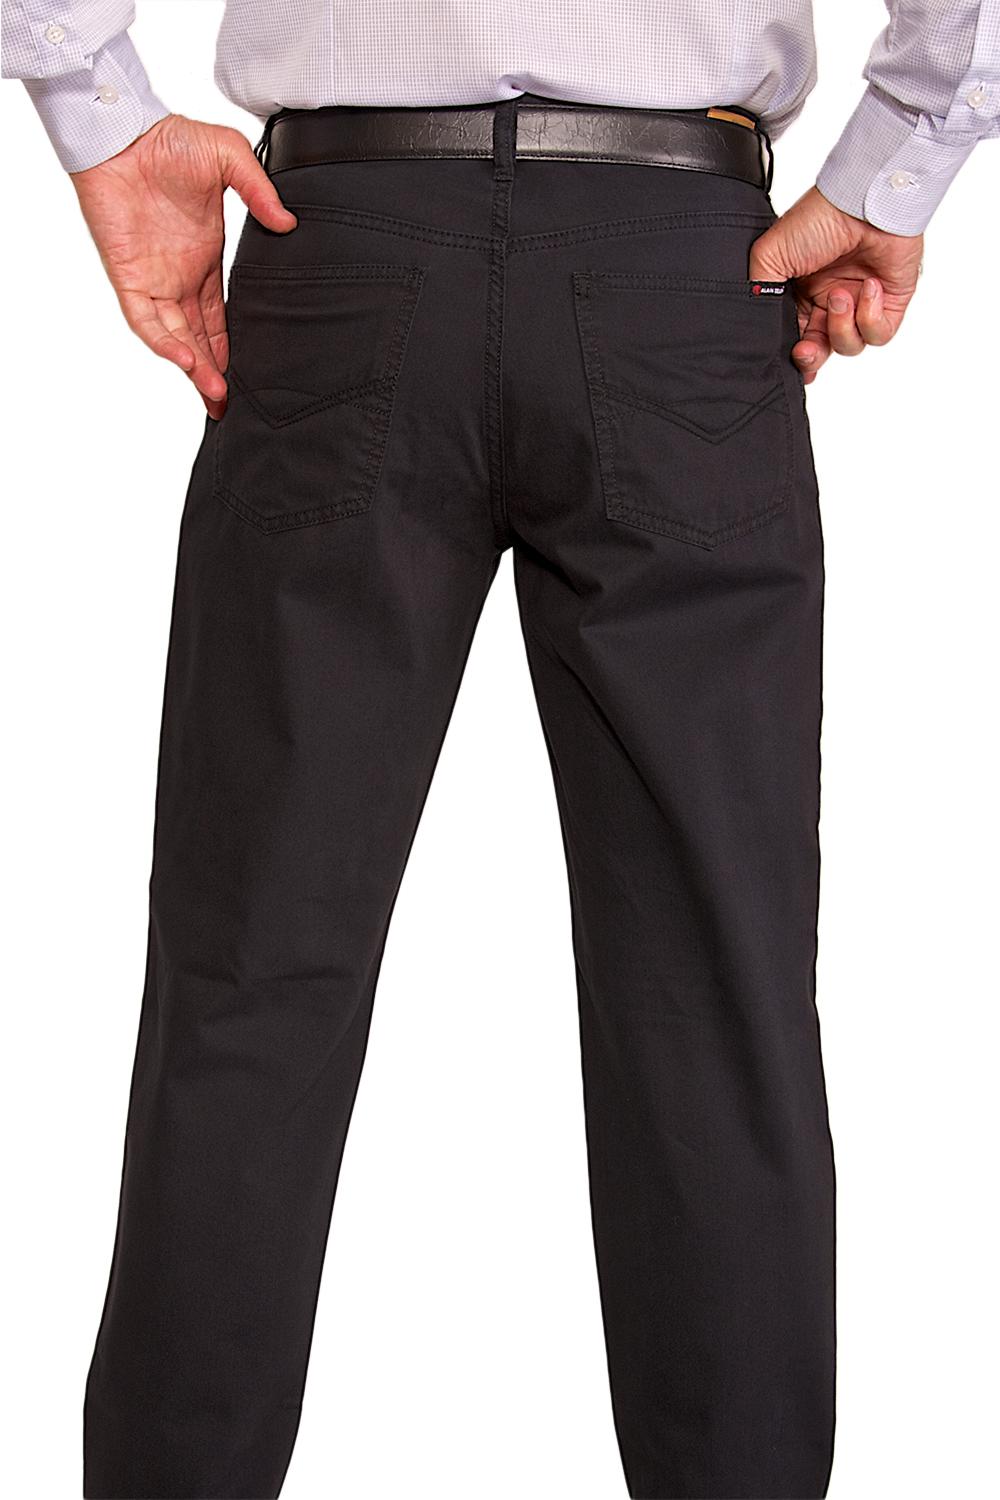 Casual black trousers - Trousers - E-shop | alaindelon.co.uk